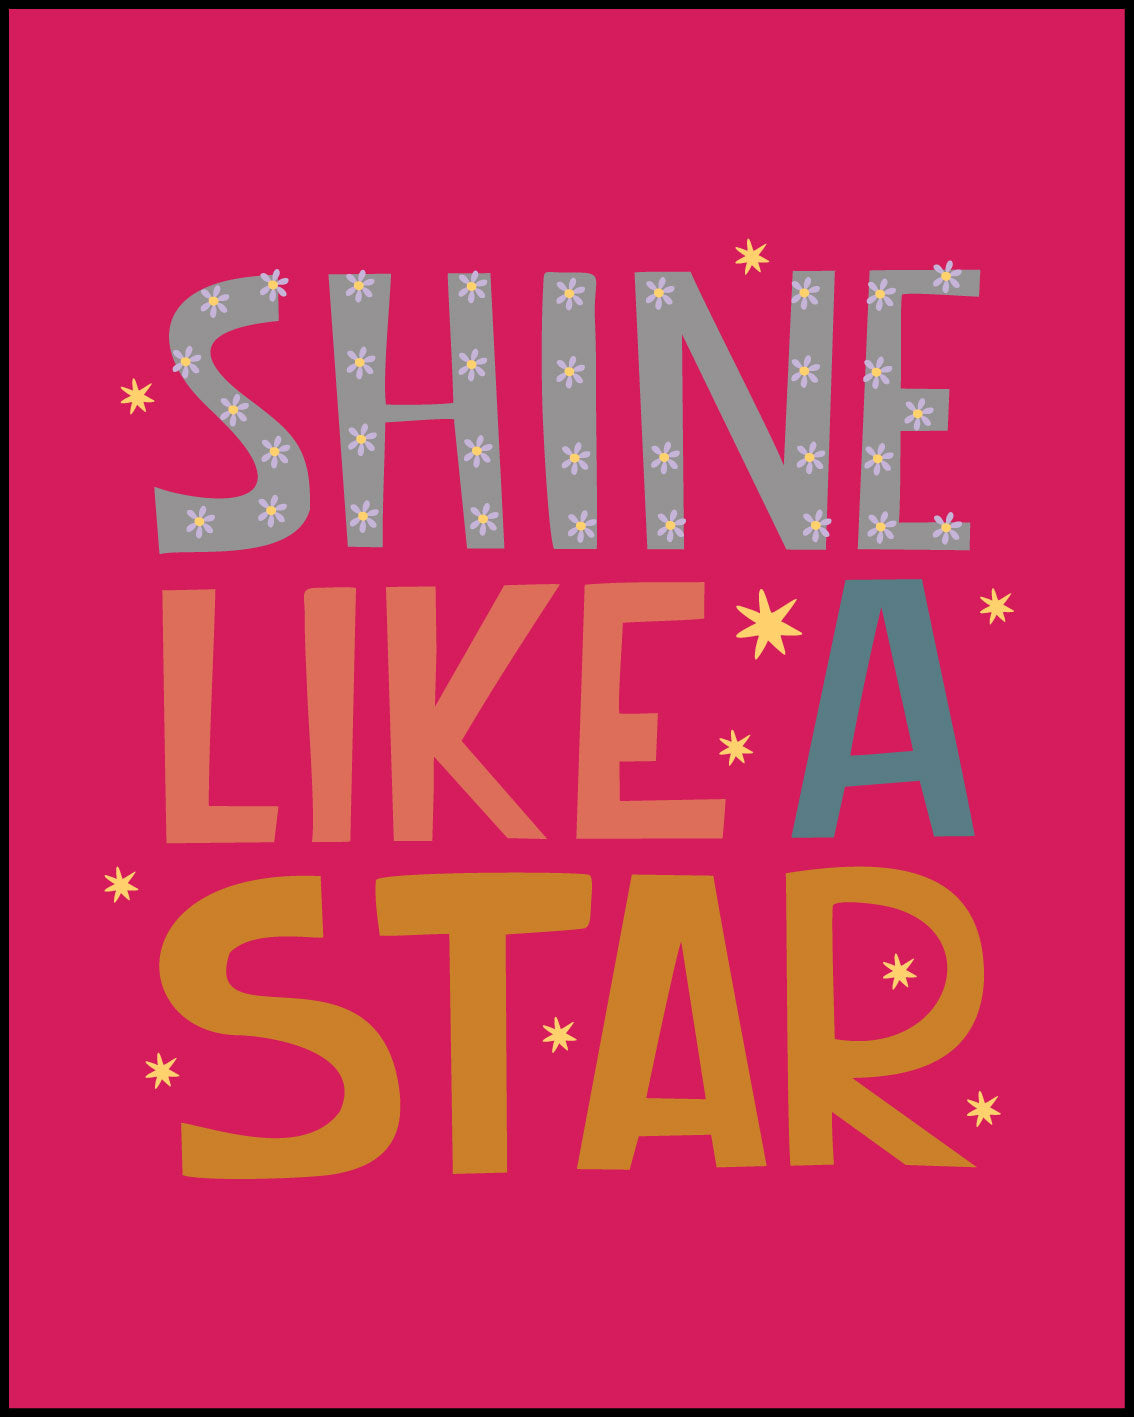 Shine like a star Poster